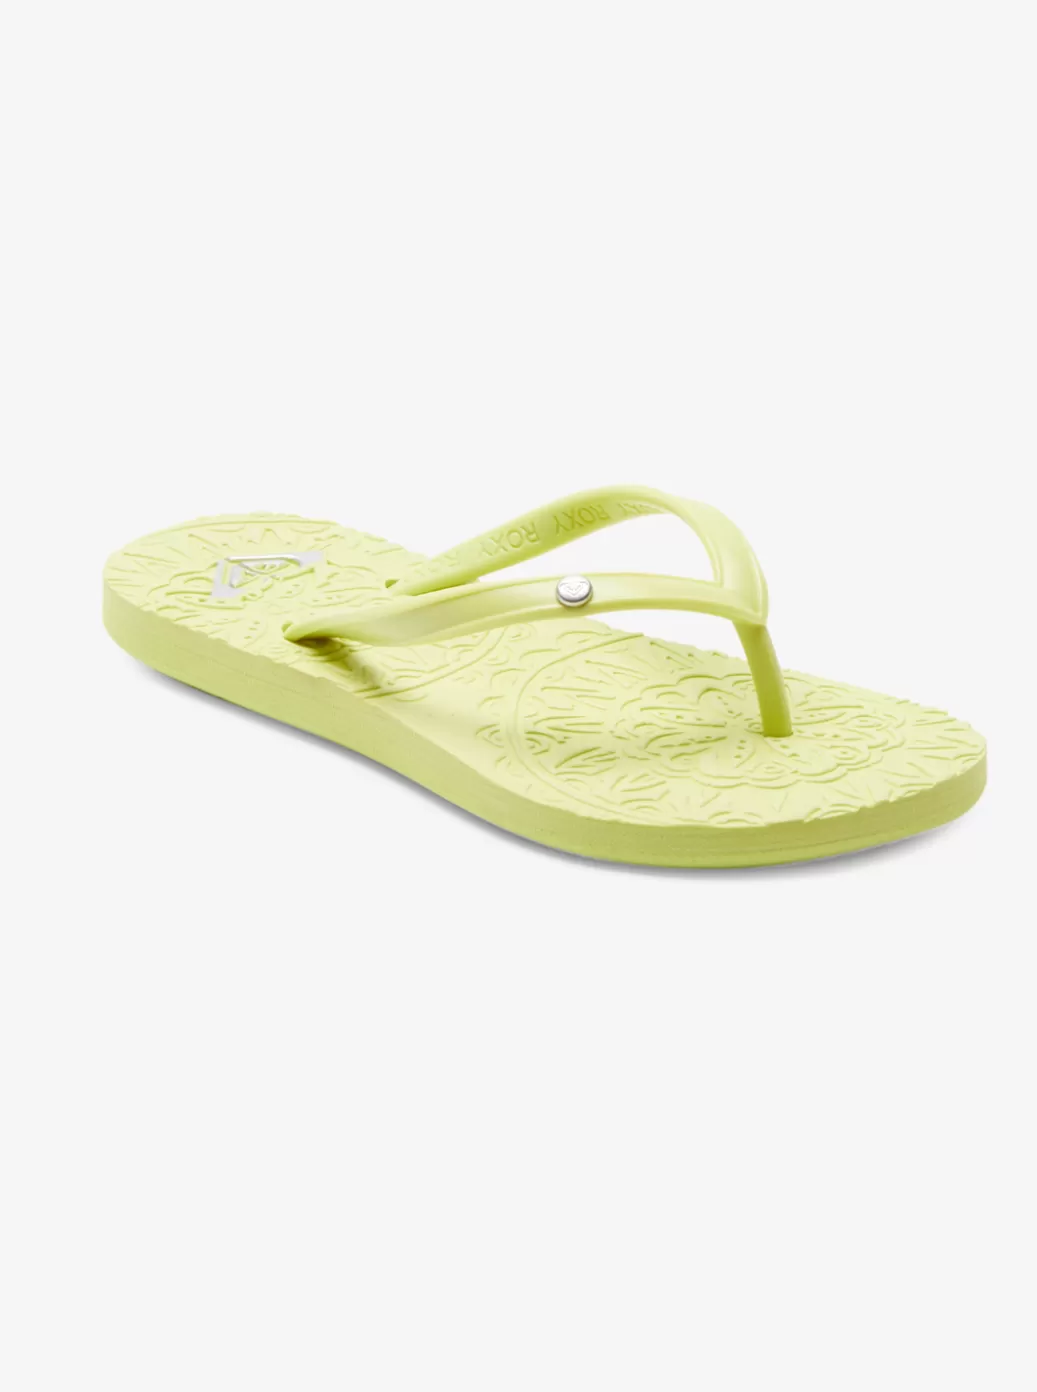 Shoes & Sandals | KIDS ROXY Girl's 4-16 Antilles Flip-Flops Lime Green